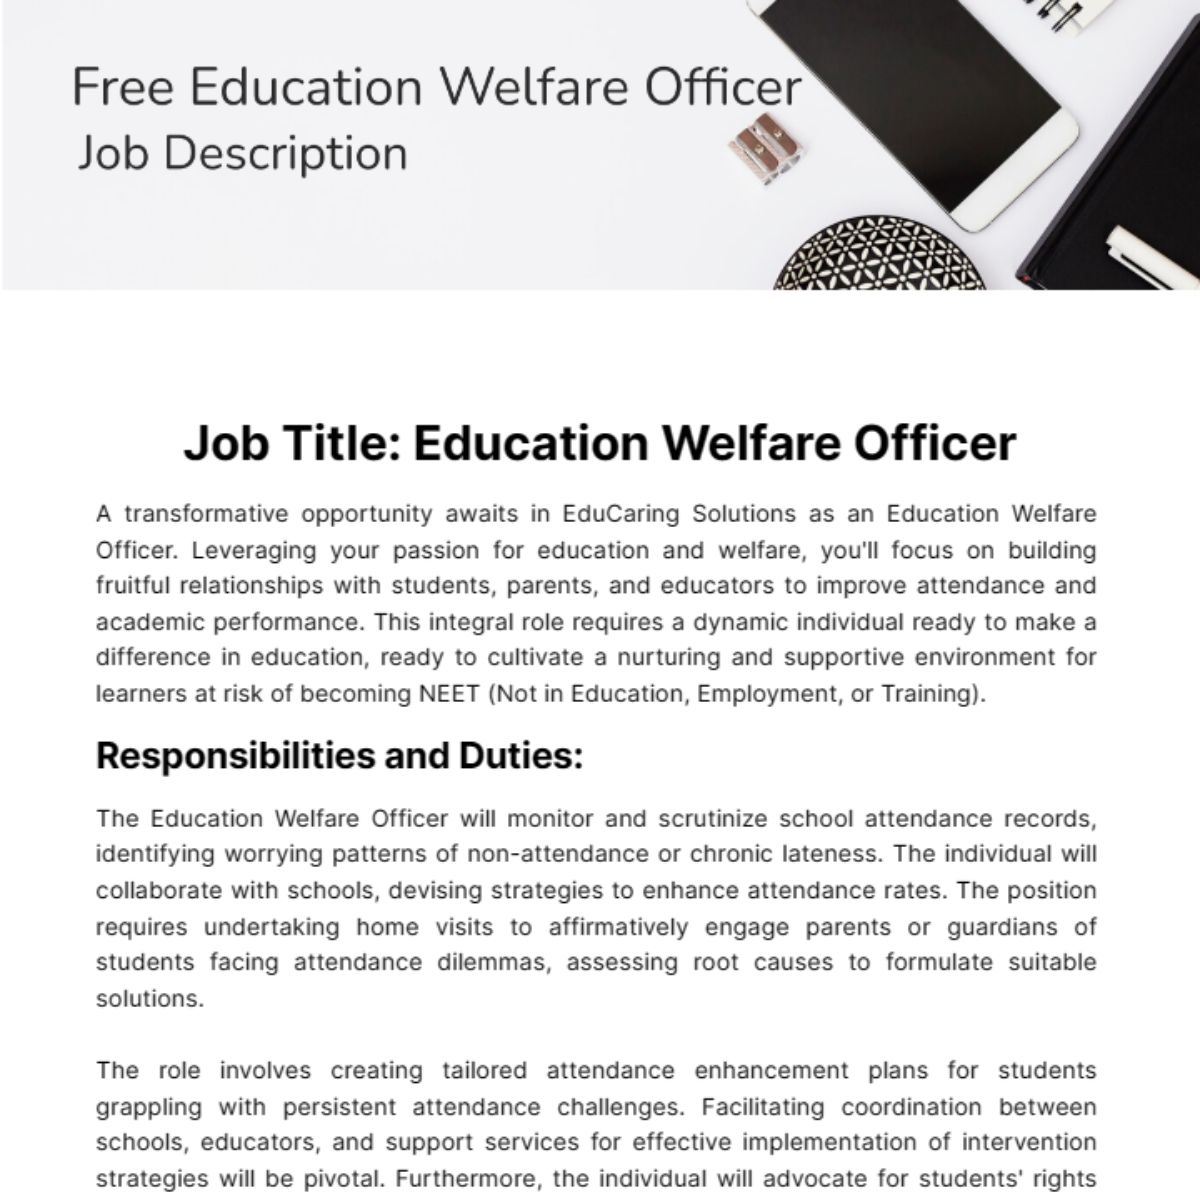 Free Education Welfare Officer Job Description Template